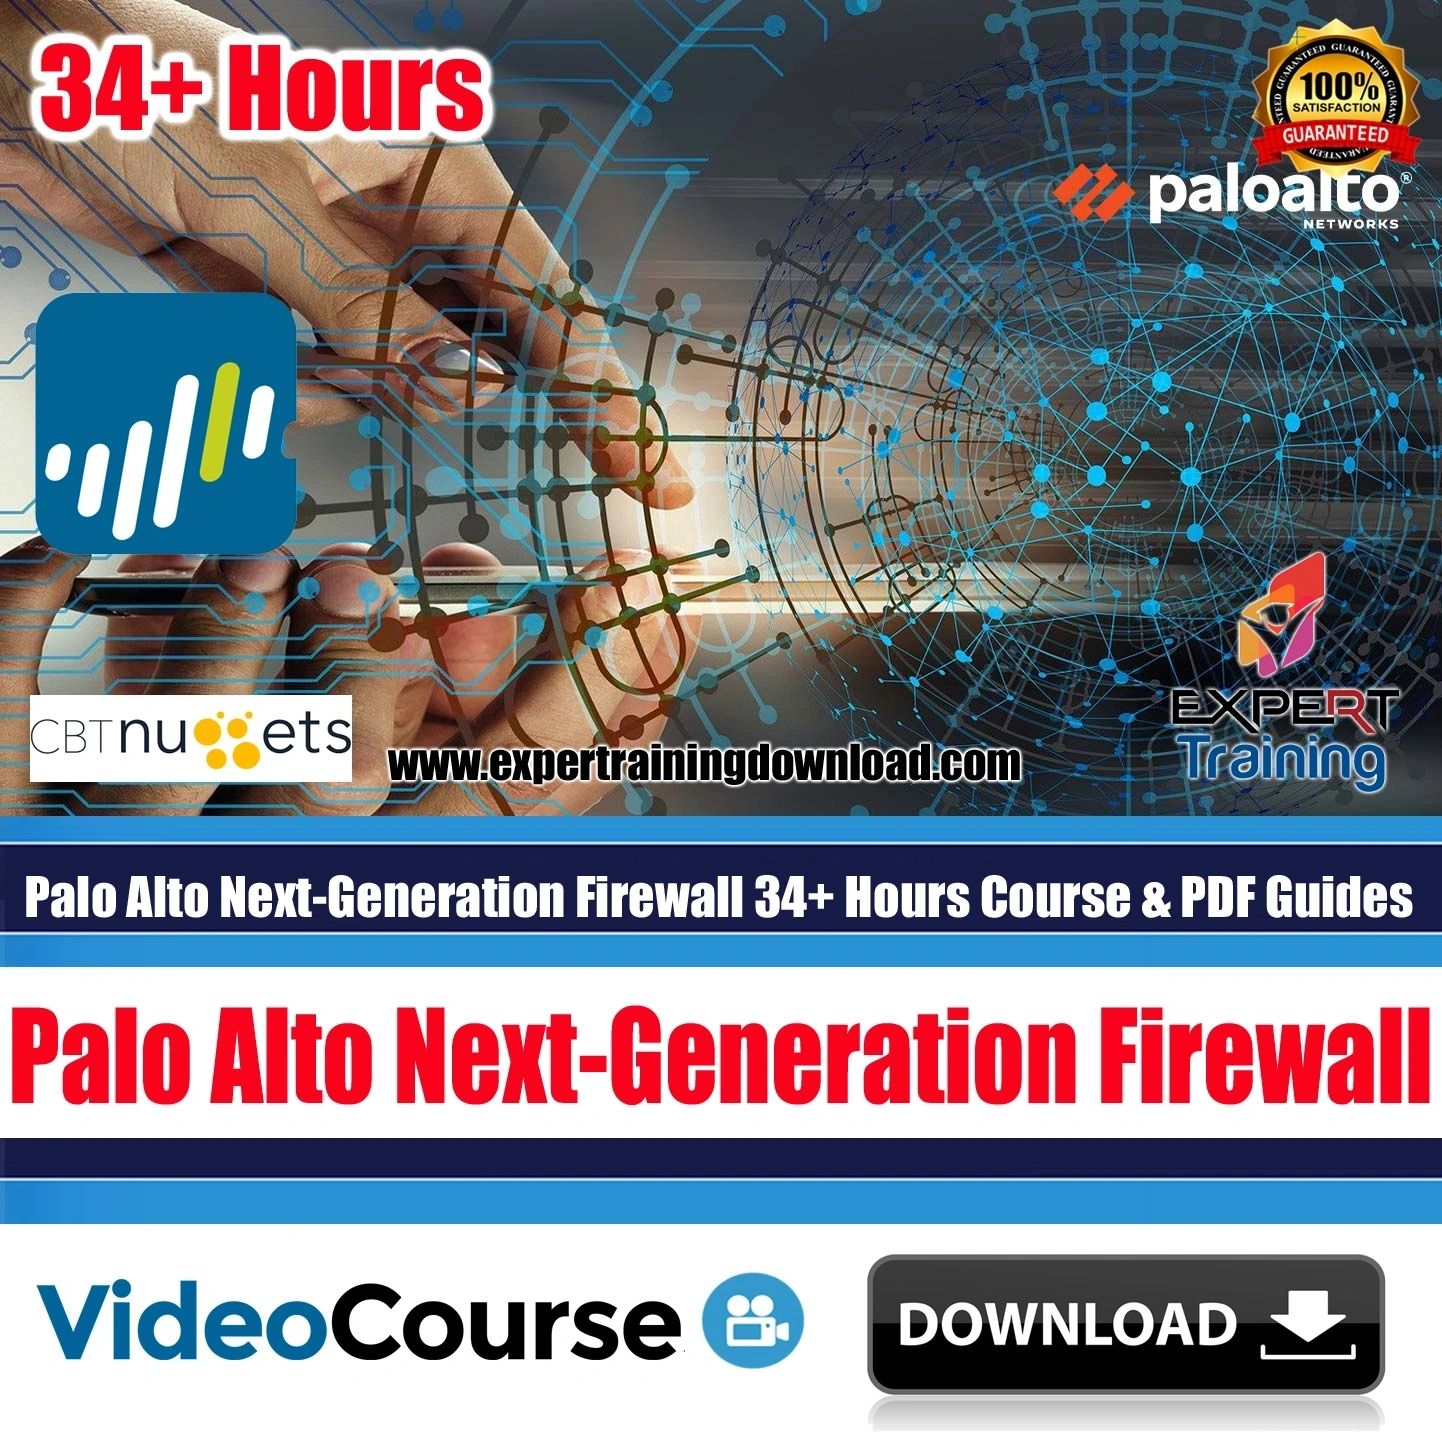 Palo Alto Next-Generation Firewall 34+ Hours Course & PDF Guide